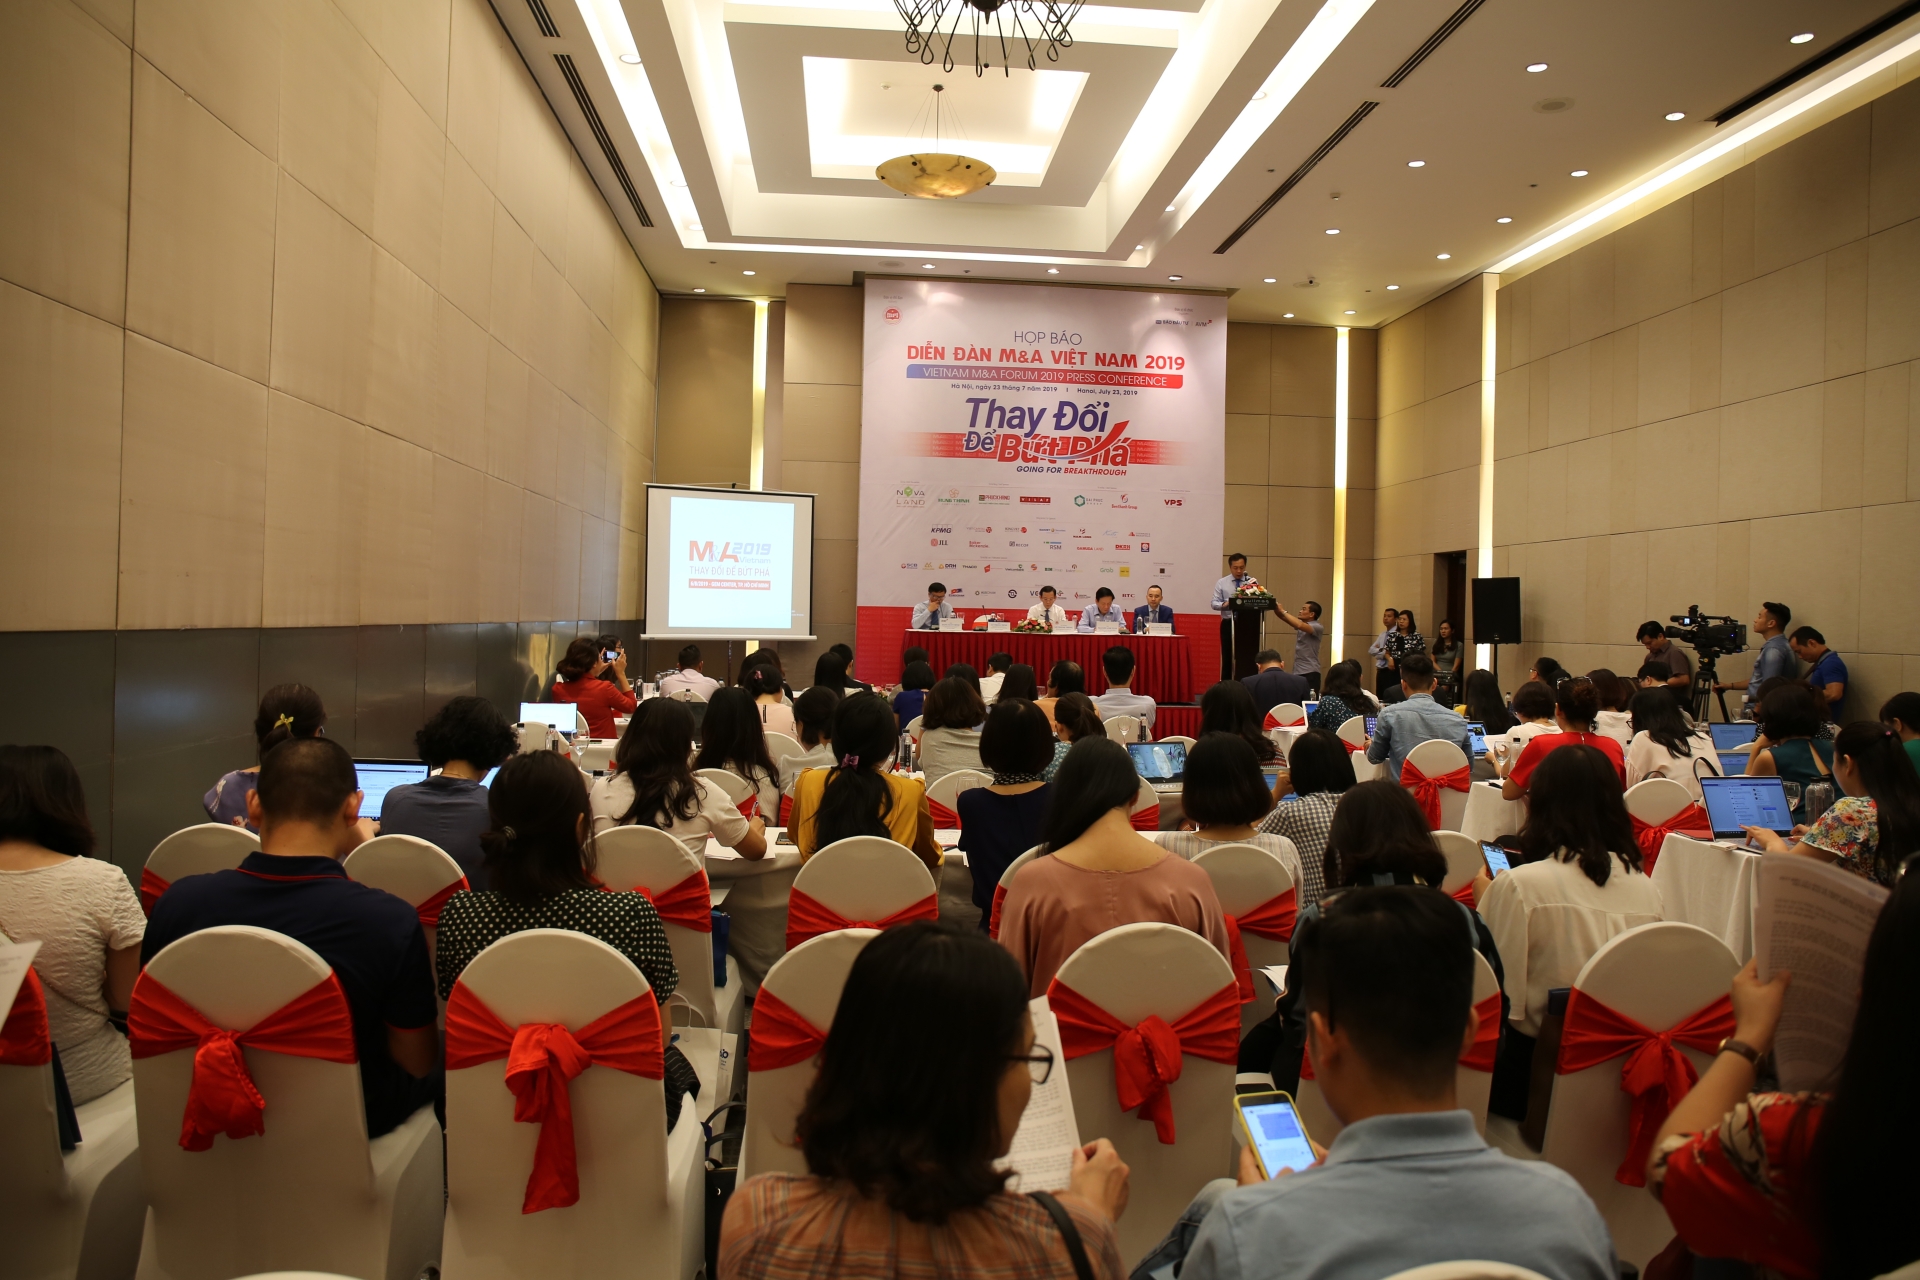 M&A Vietnam Forum 2019 – “Going for breakthrough”